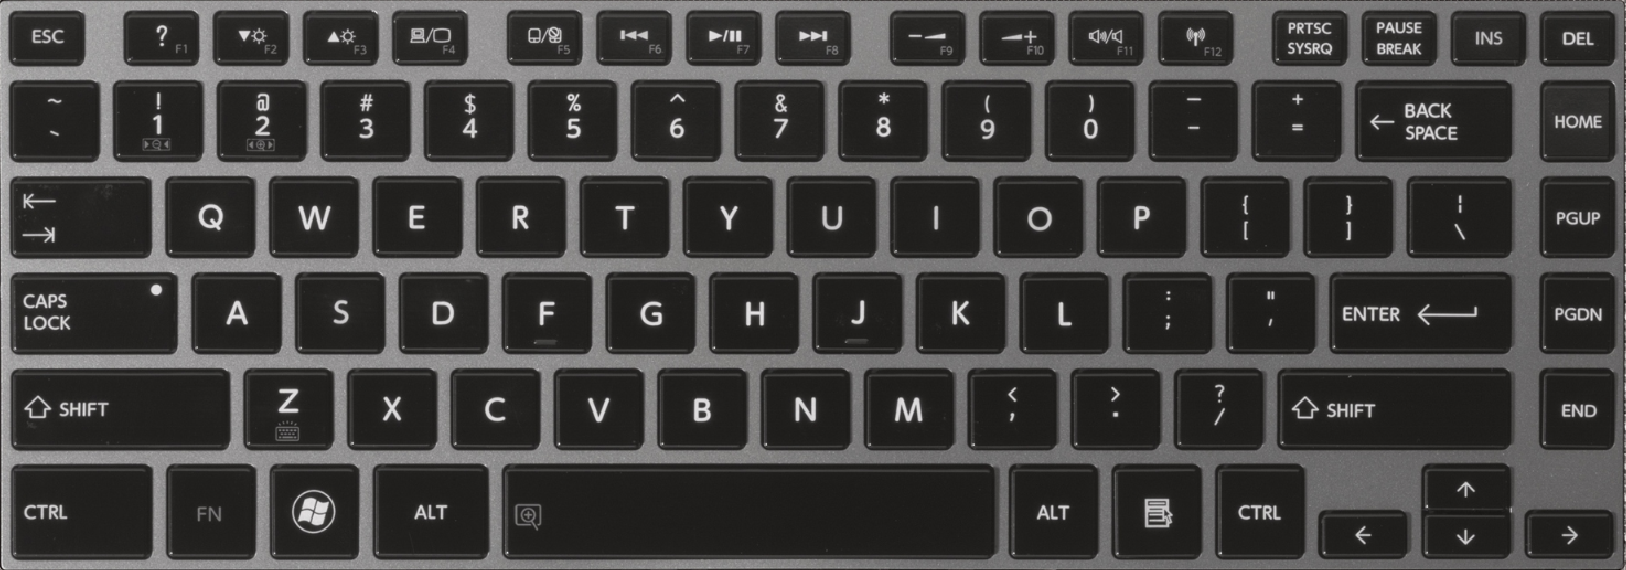 Toshiba P845 Laptop keyboard key